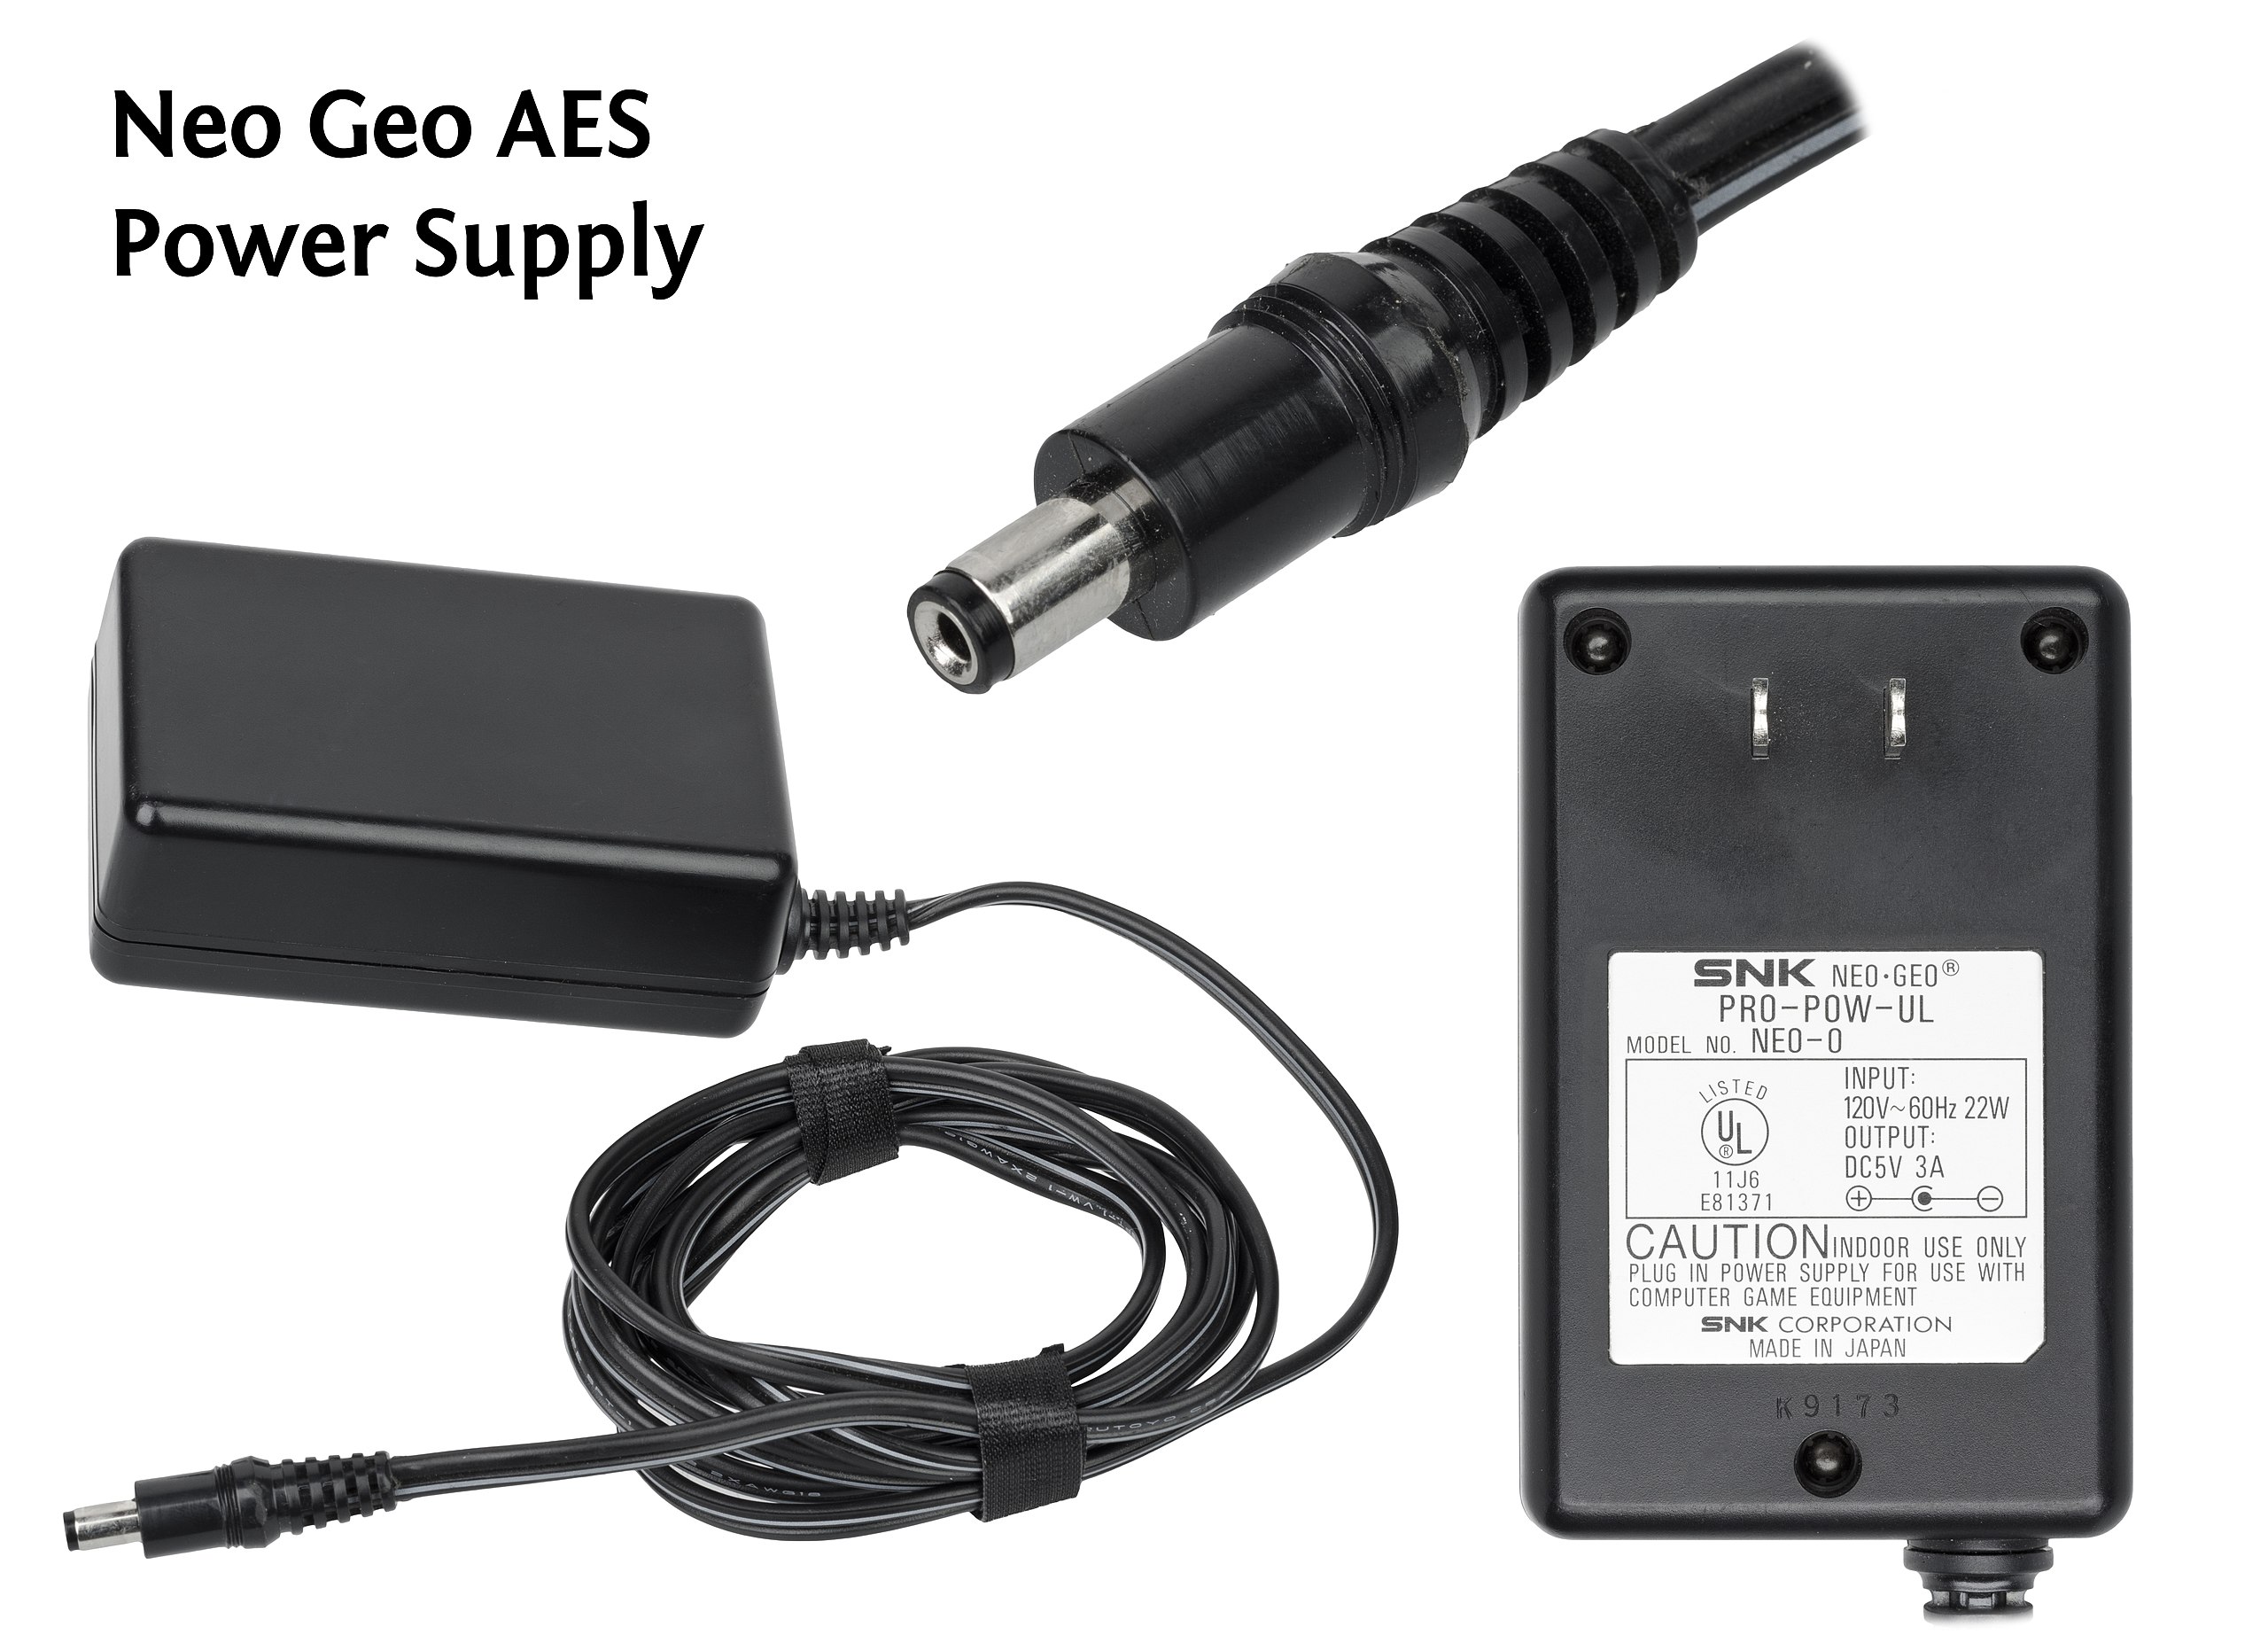 2560px-Neo-Geo-AES-Power-Supply.jpg